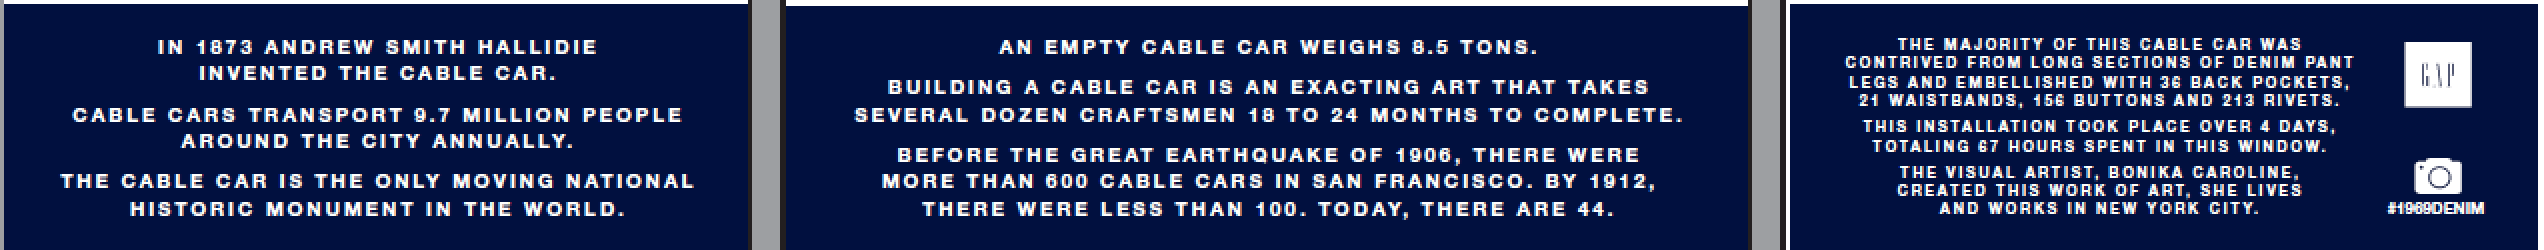 GAP Cable Car, SF